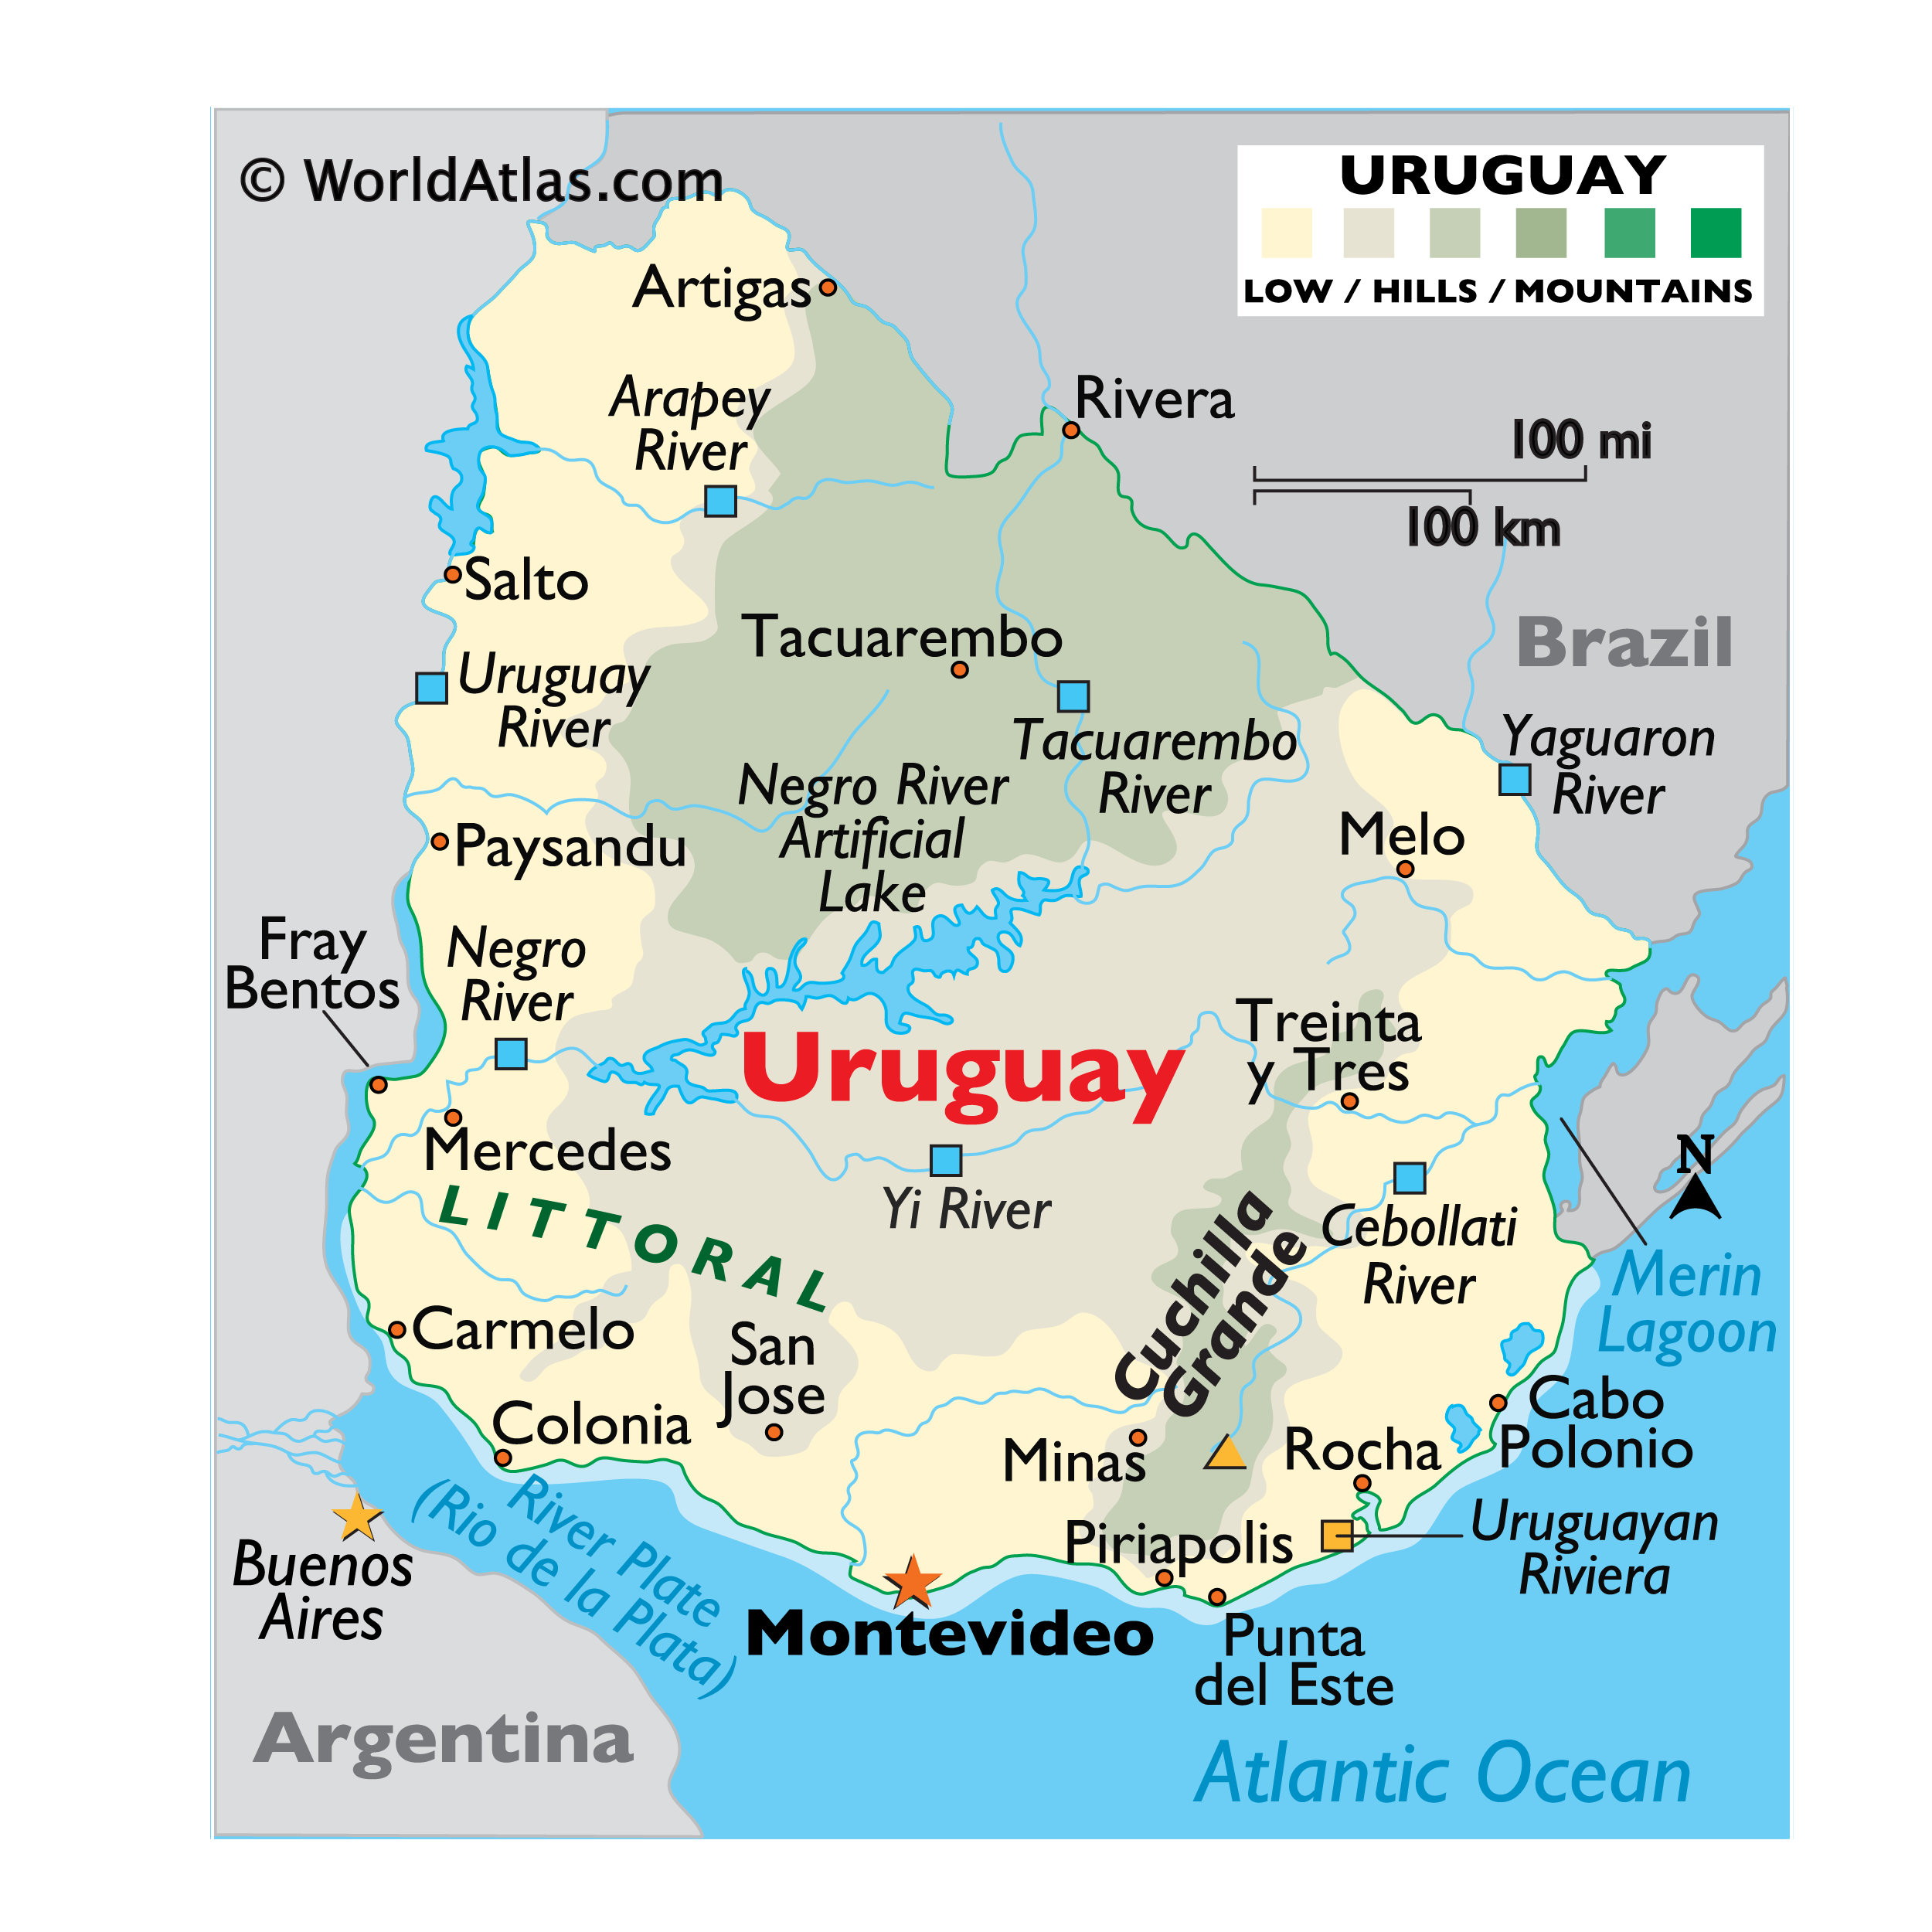 Uruguay Facts on Largest Cities, Populations, Symbols - Worldatlas.com